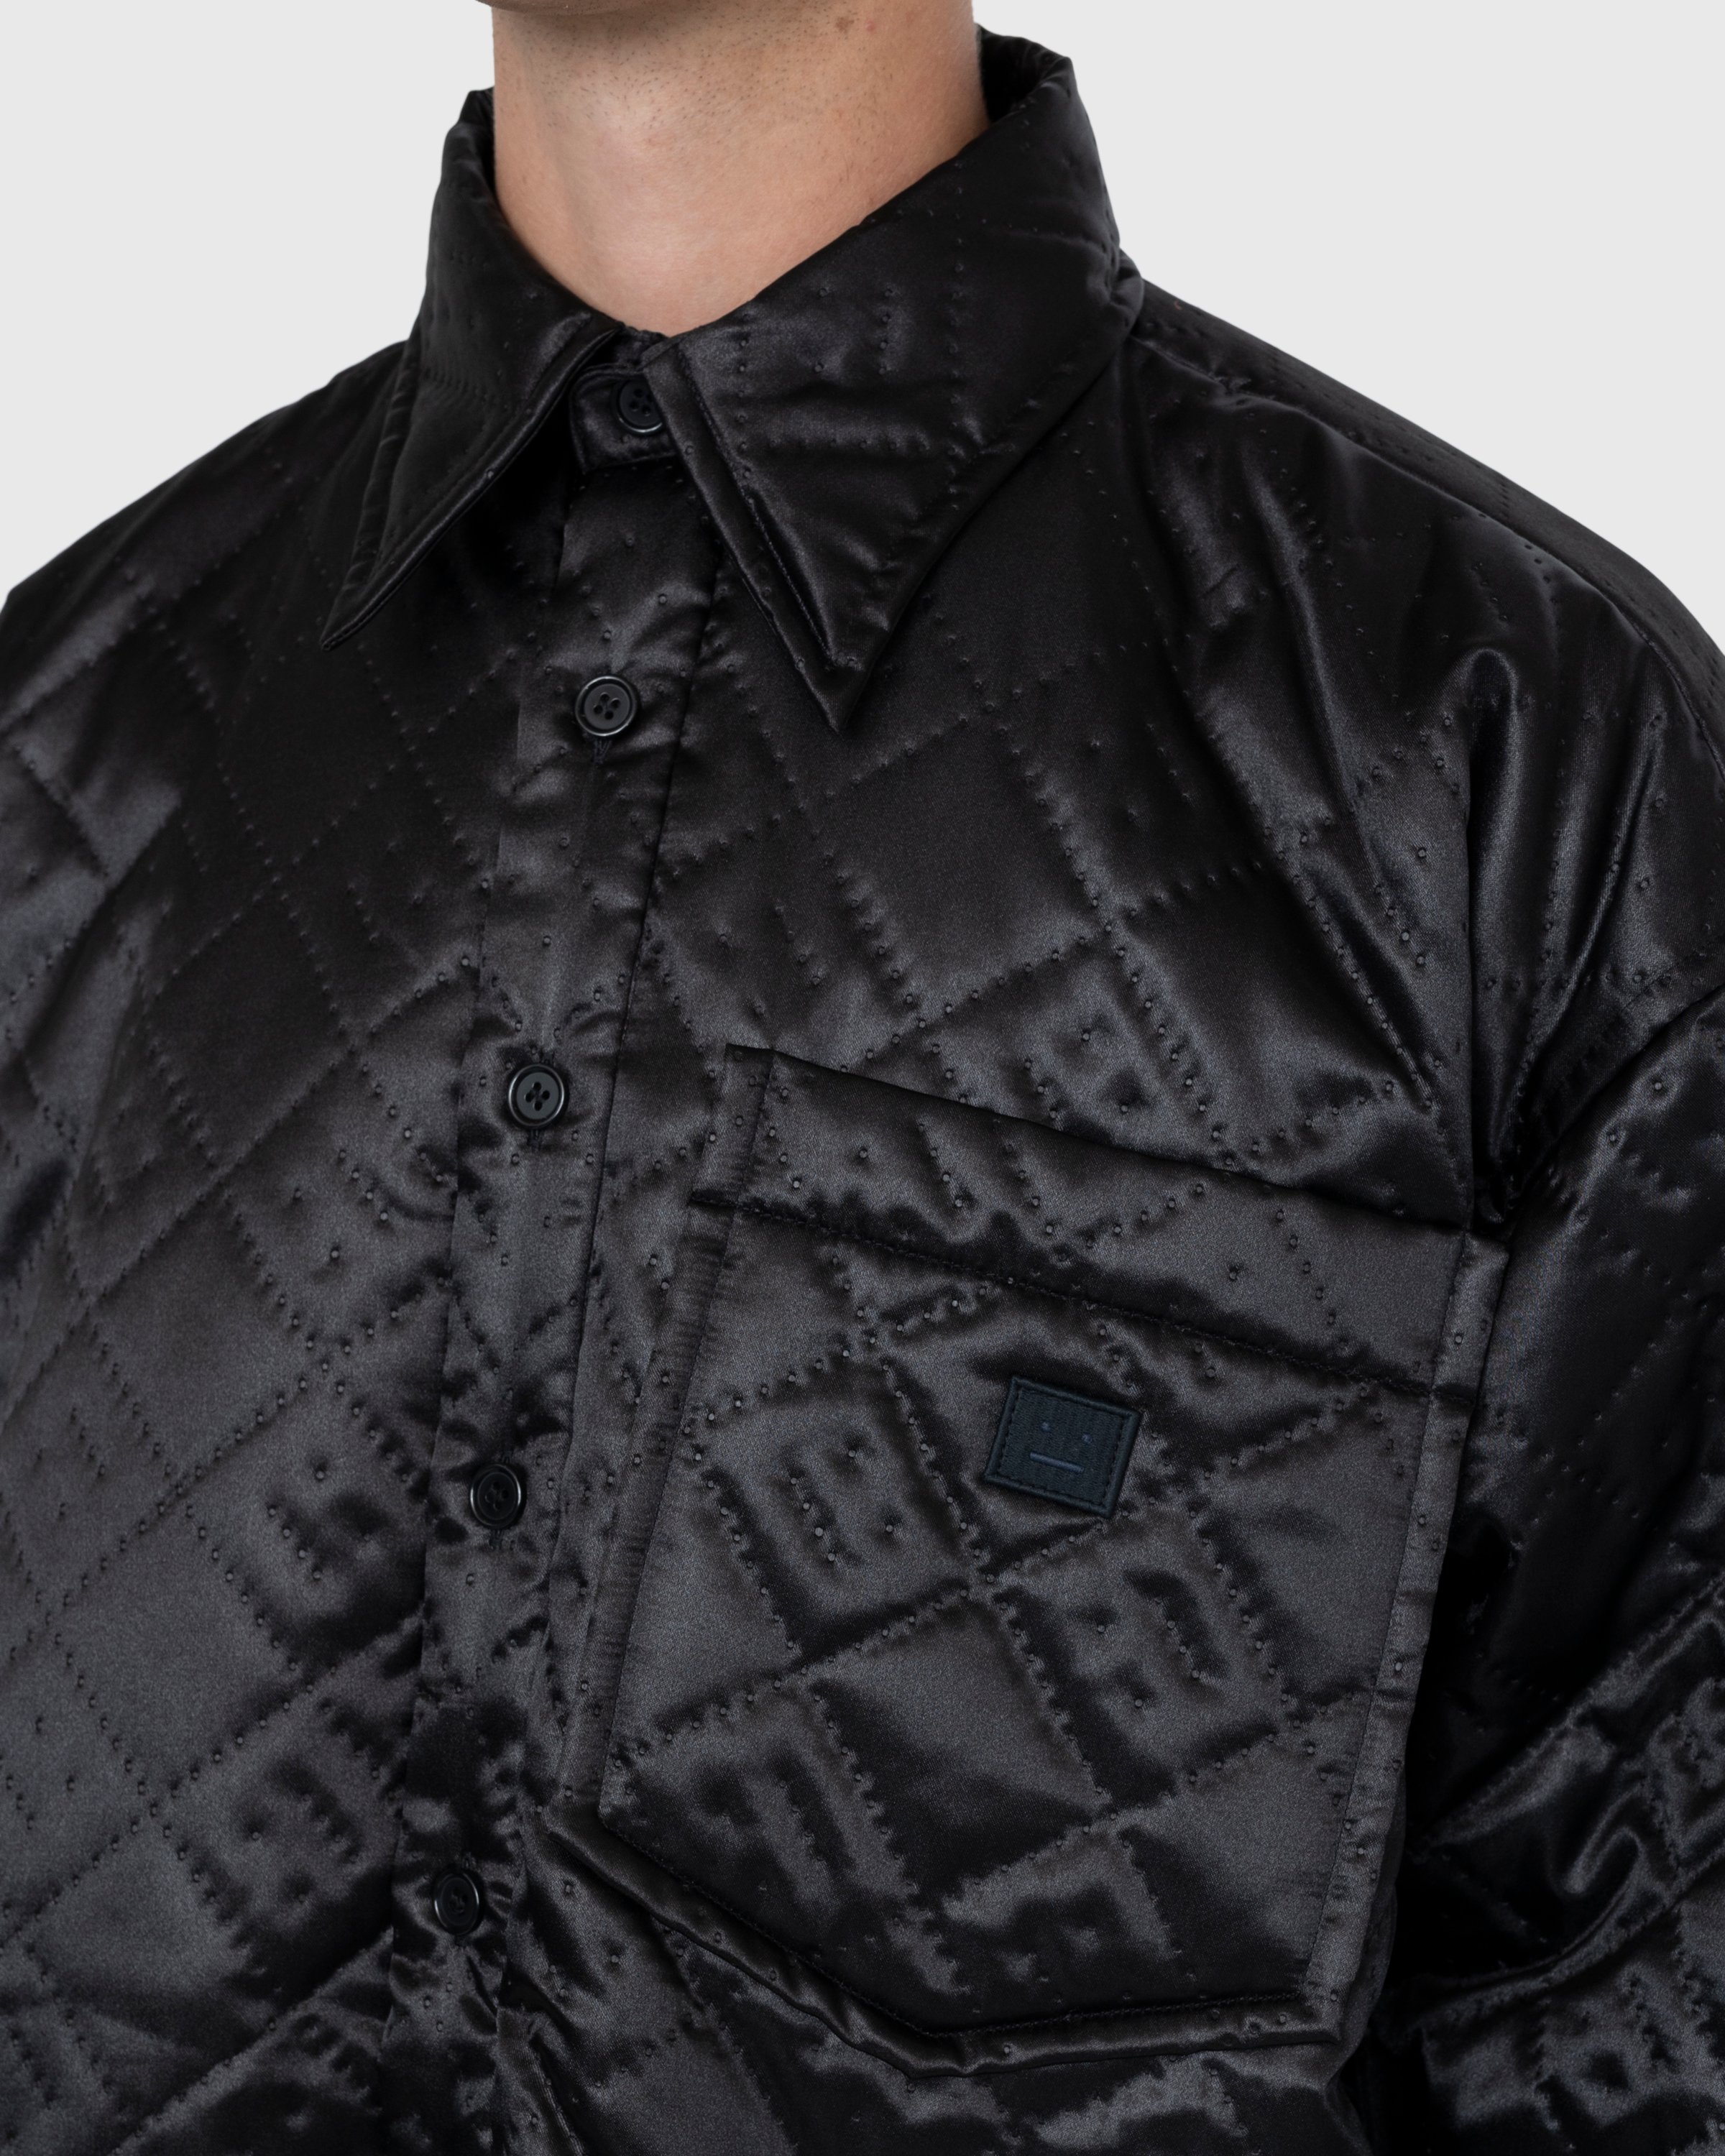 Acne Studios - Quilted Satin Jacket Black - Clothing - Black - Image 8